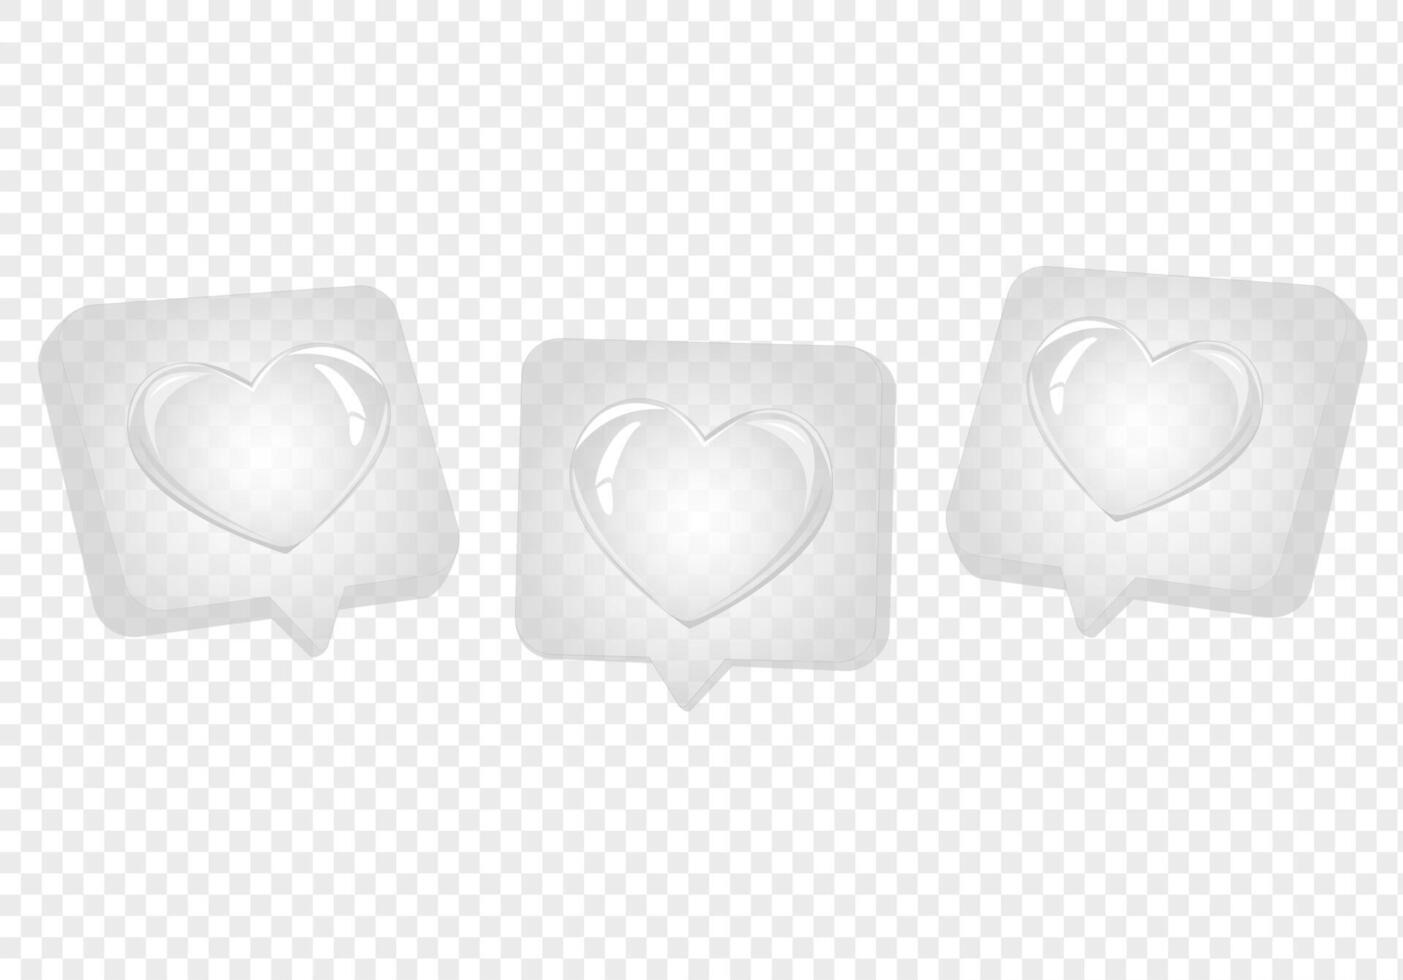 Textbox, Love icon, social media, sticker reaction.Set of heart in speech bubble icon. Vector illustration